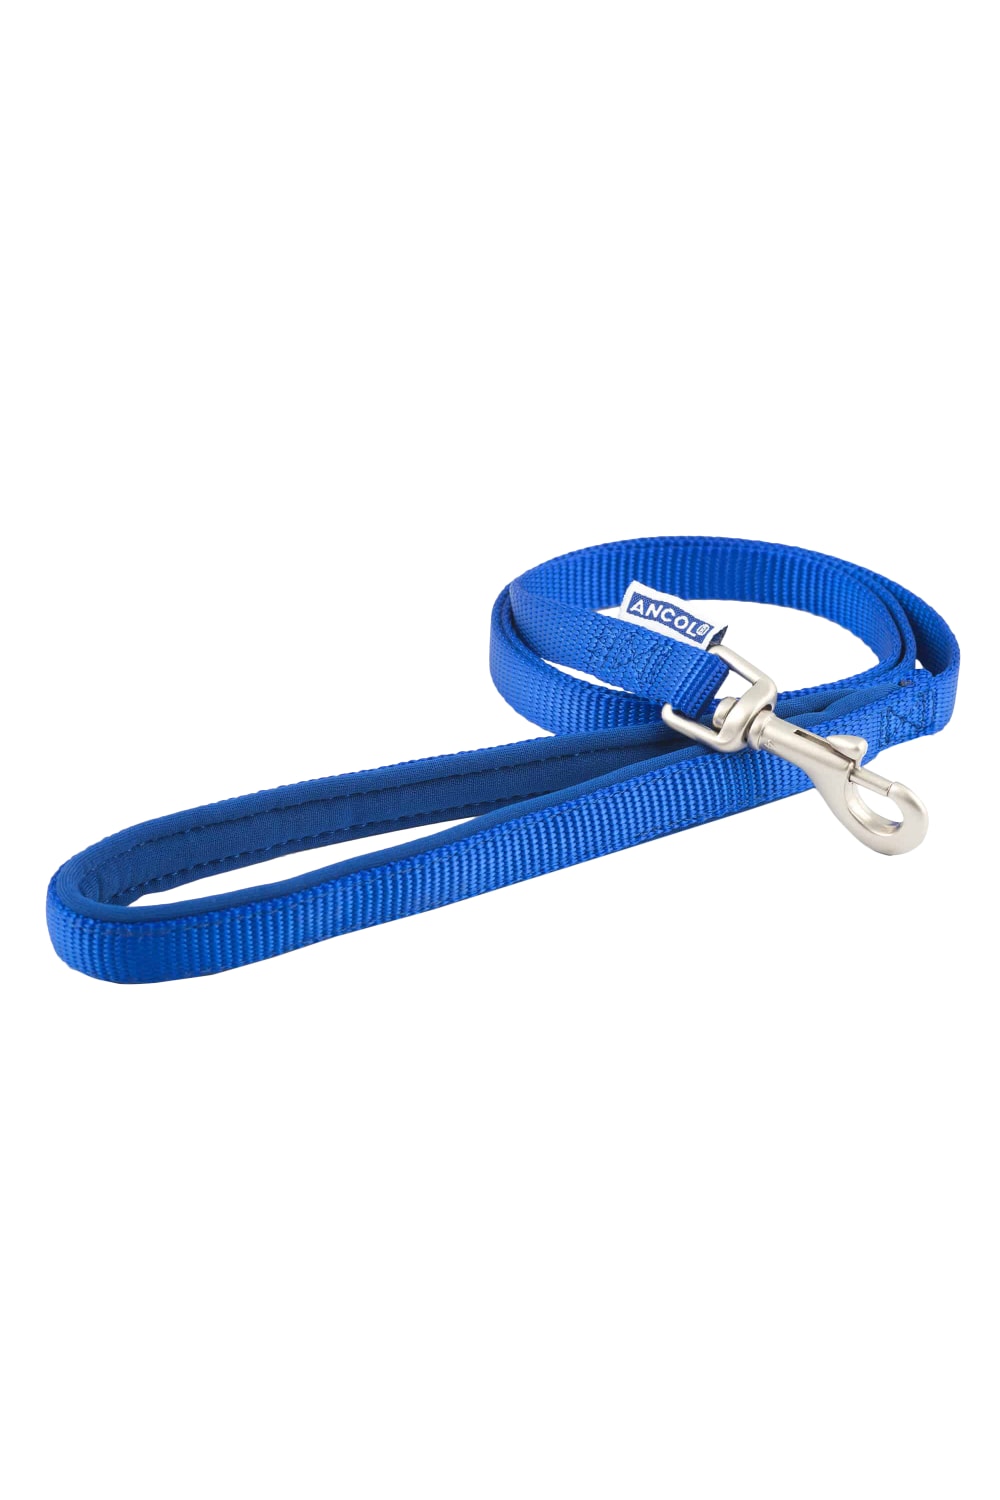 Ancol Nylon Padded Dog Lead (Blue) (185cm x 2.5cm)